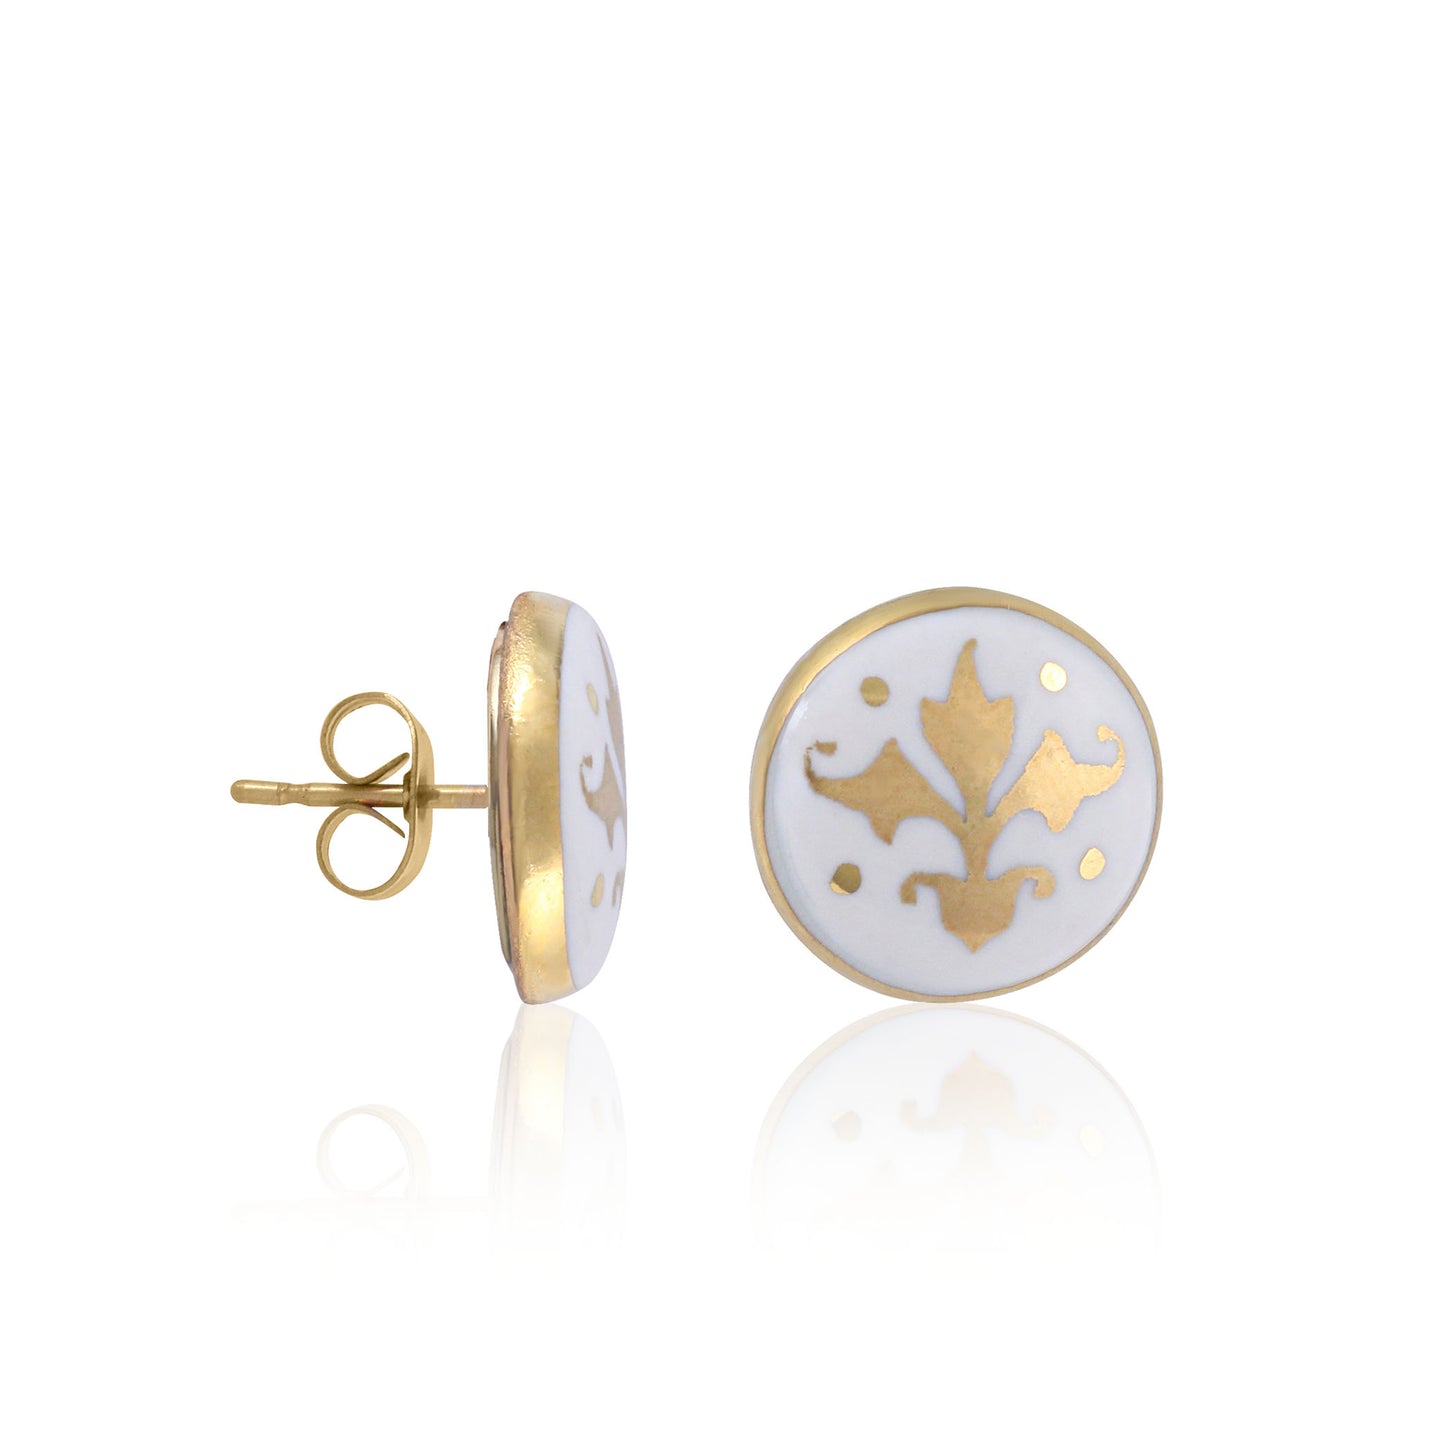 BAROQUE white gold plated fine porcelain earring set